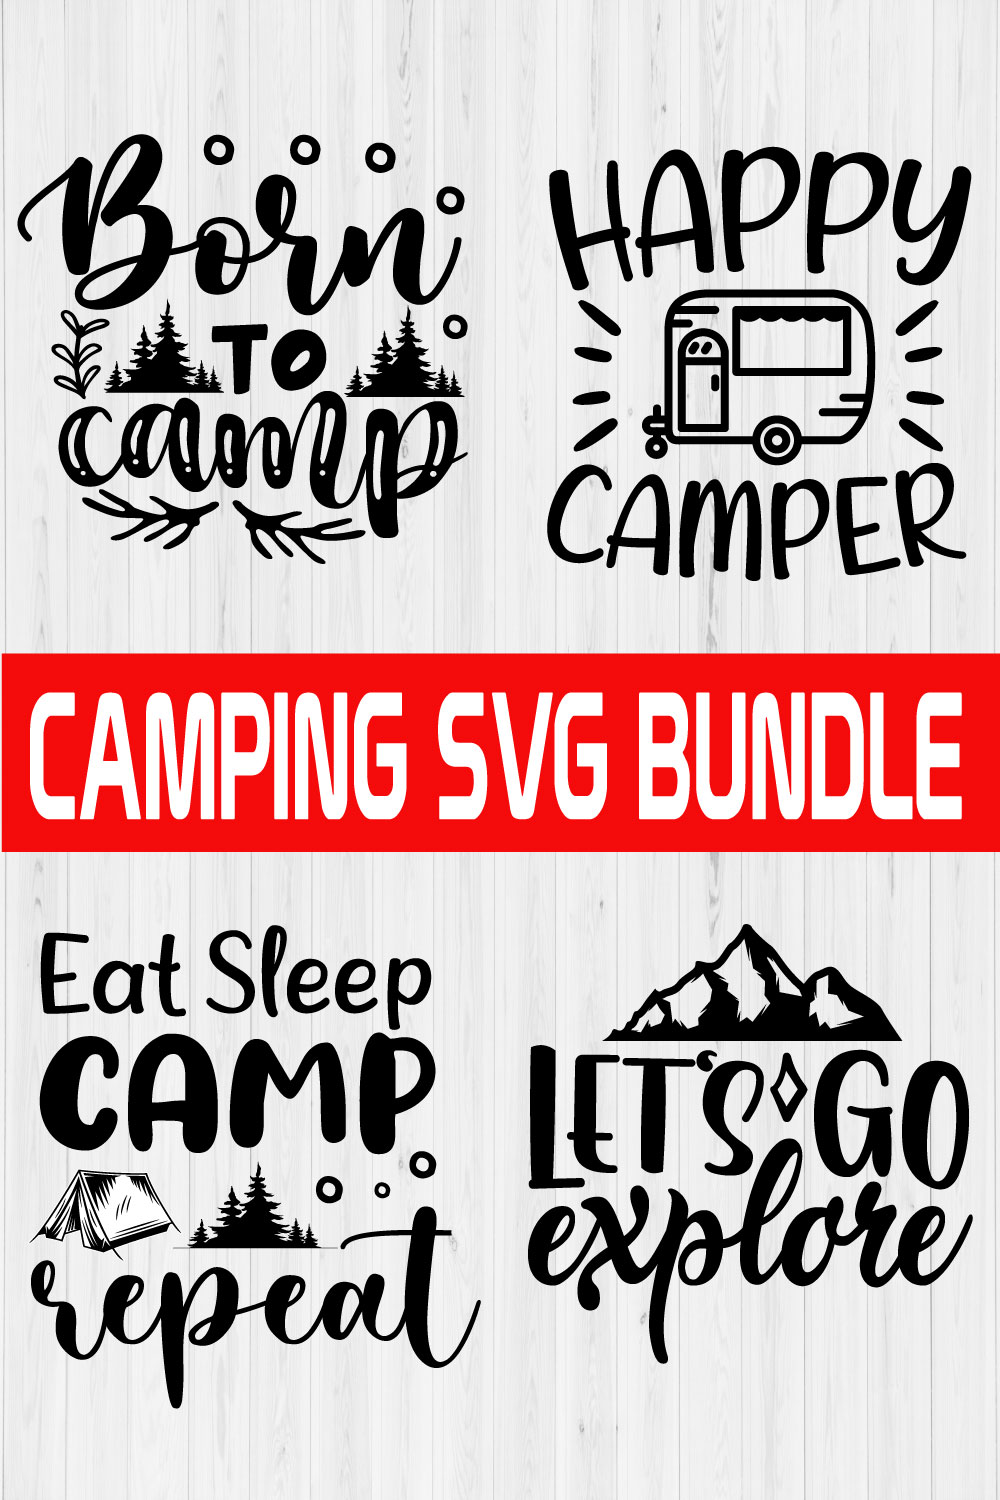 Camping Svg Design Bundle Vol2 pinterest preview image.